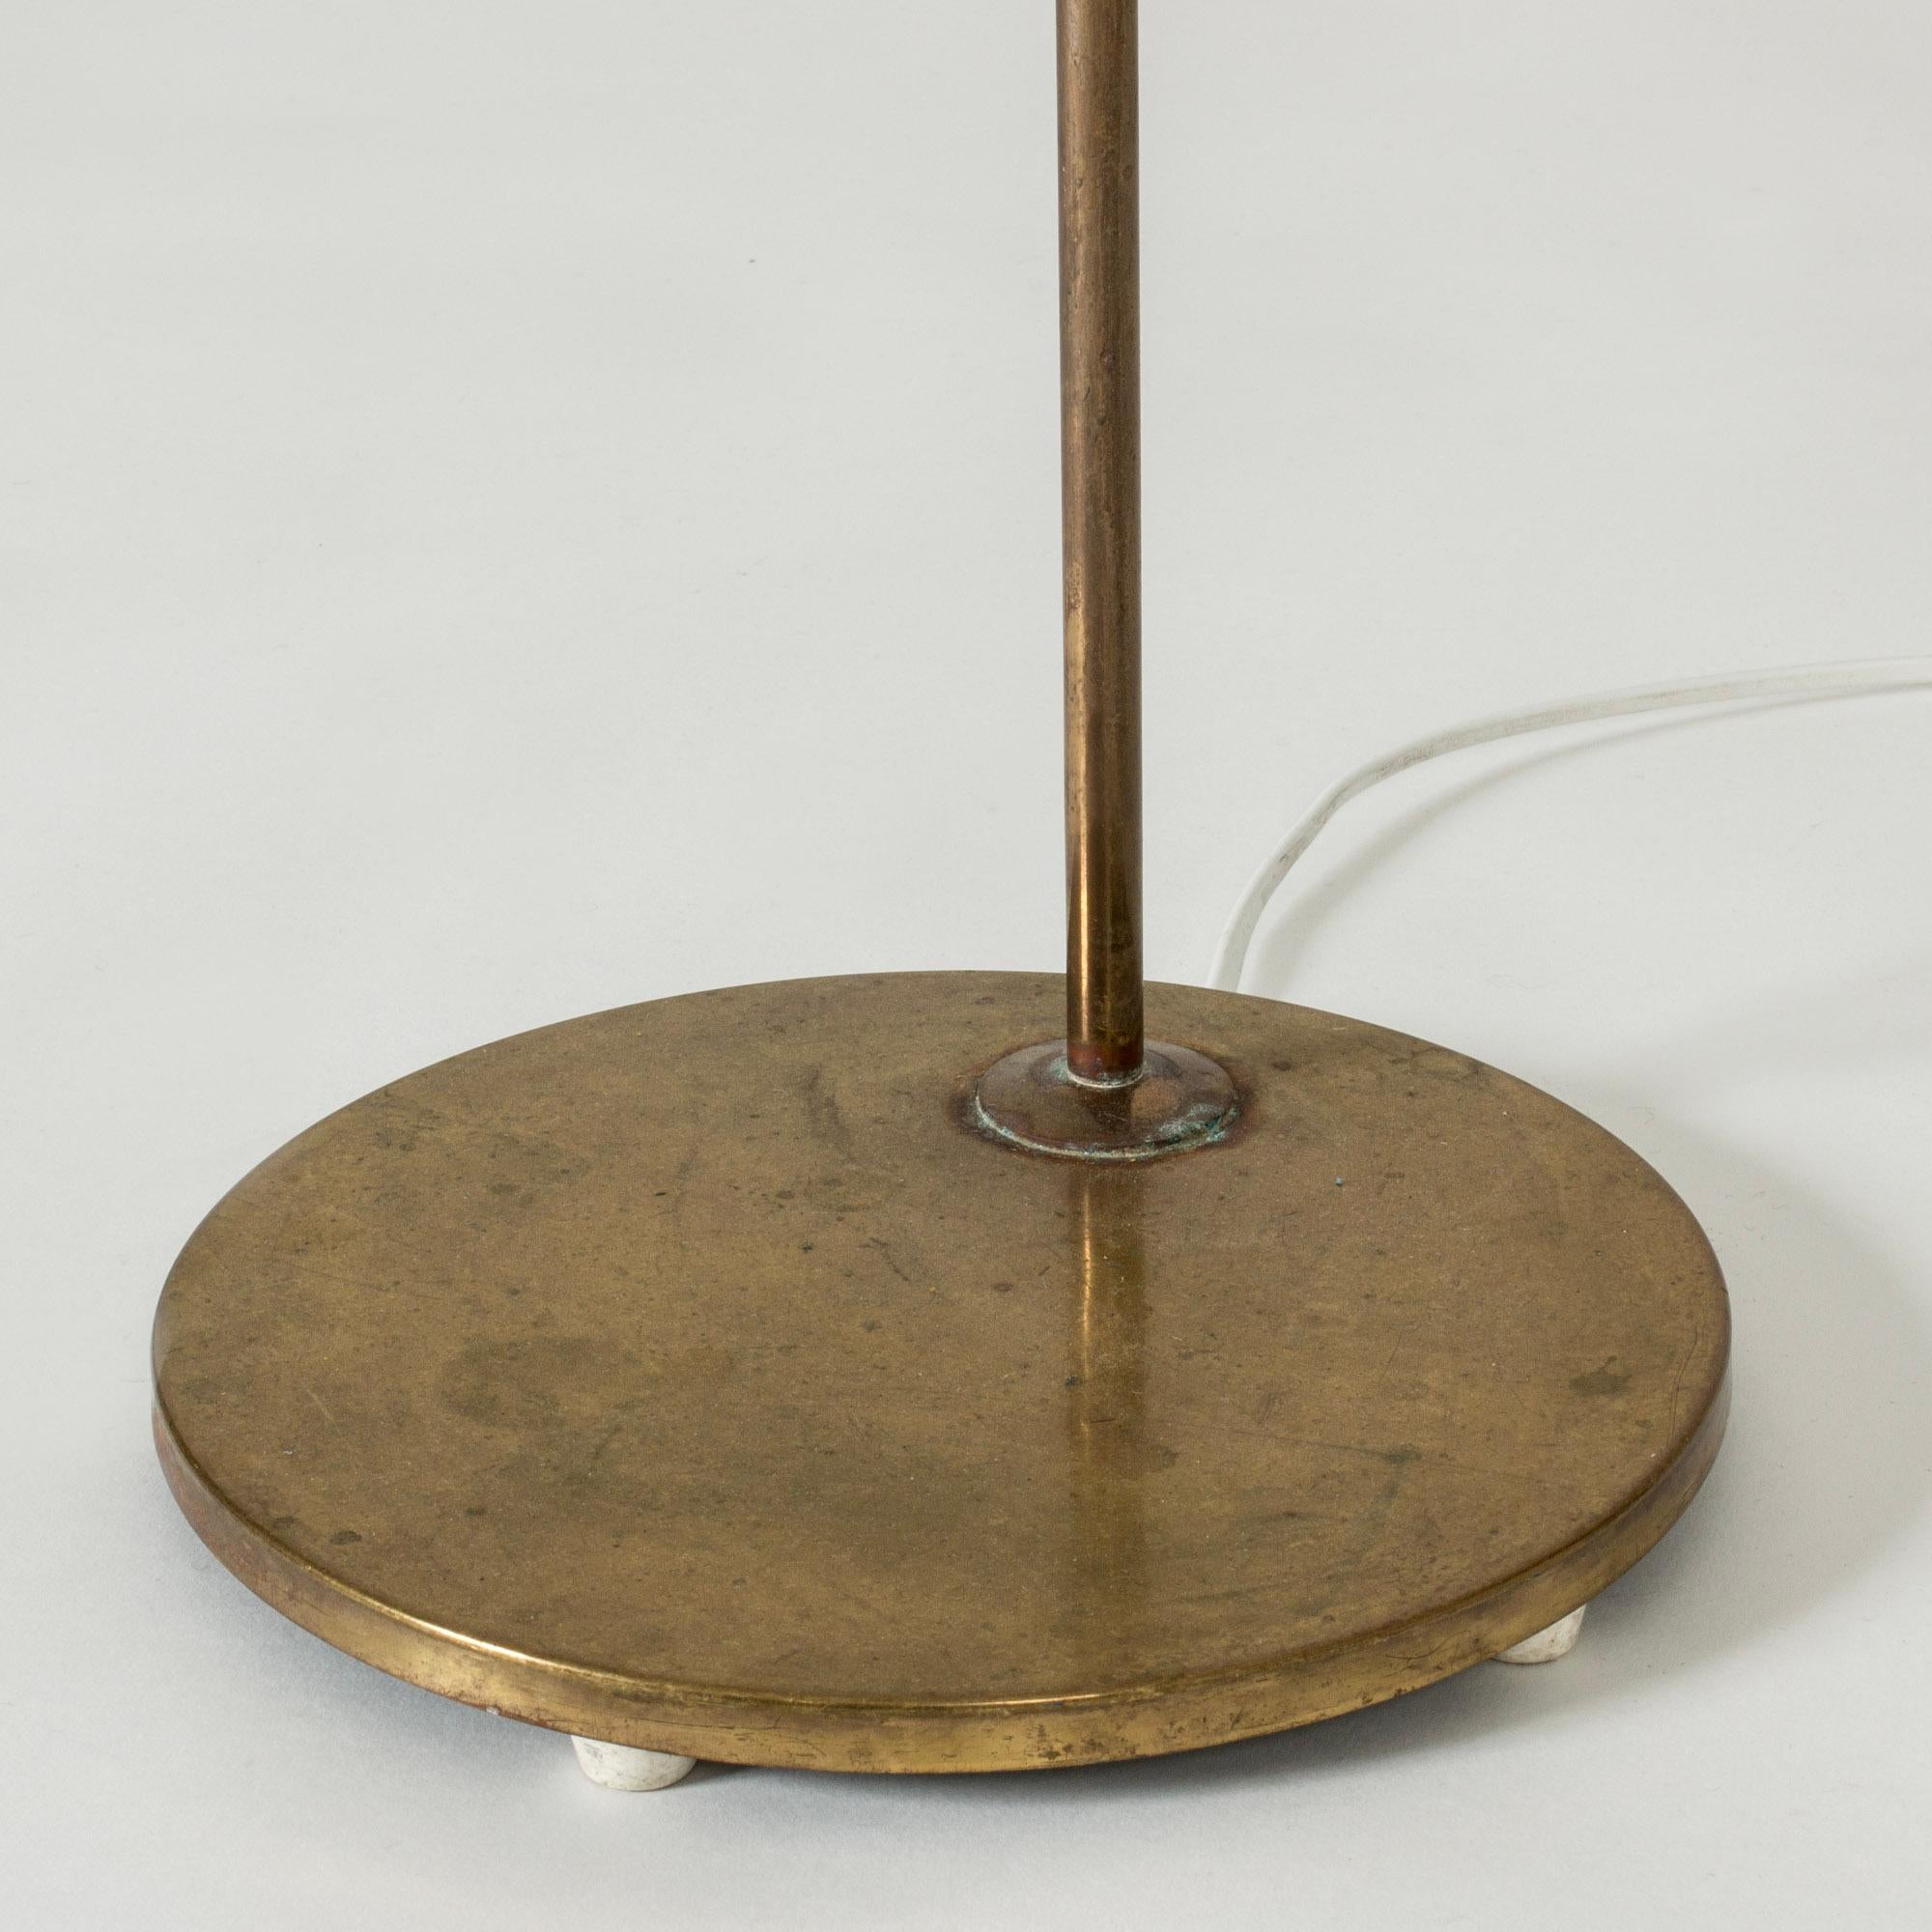 Scandinavian Modern Vintage Midcentury Brass Floor Lamp from Bergboms, Sweden, 1960s For Sale